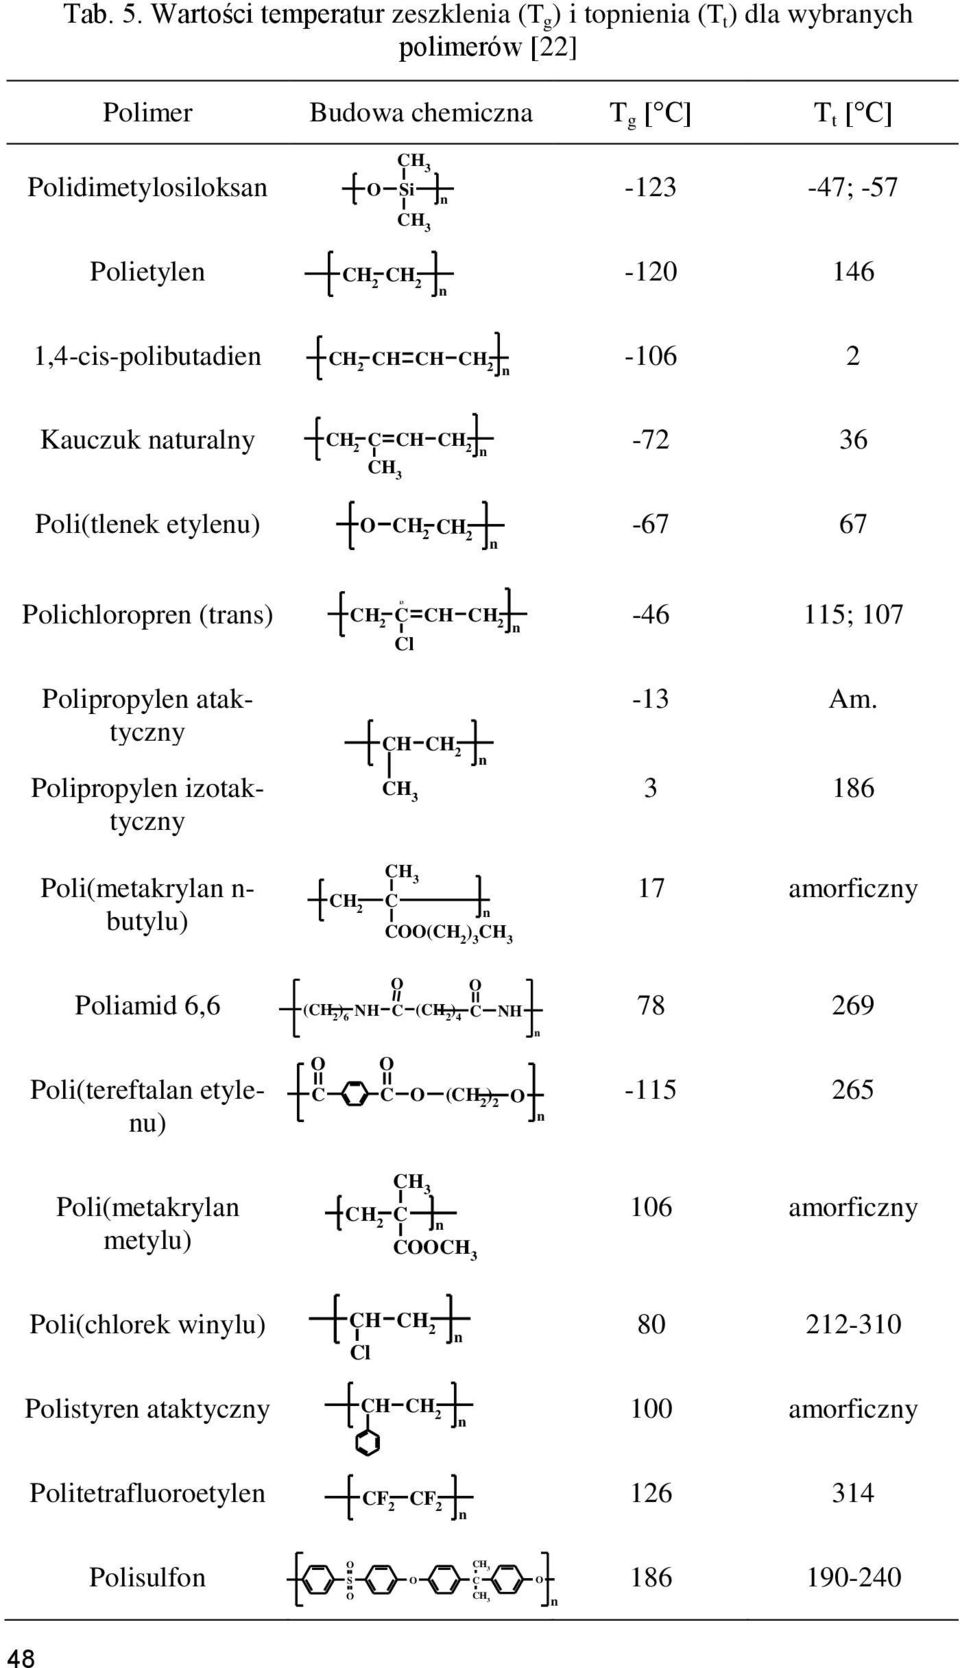 1,4-cis-polibutadie -106 2 CH 2 CH CH CH 2 Kauczuk aturaly -72 36 CH 2 C CH CH 2 Poli(tleek etyleu) O CH 2 CH 2-67 67 Polichloropre (tras) 13 C -46 115; 107 CH 2 CH CH 2 Cl Polipropyle ataktyczy